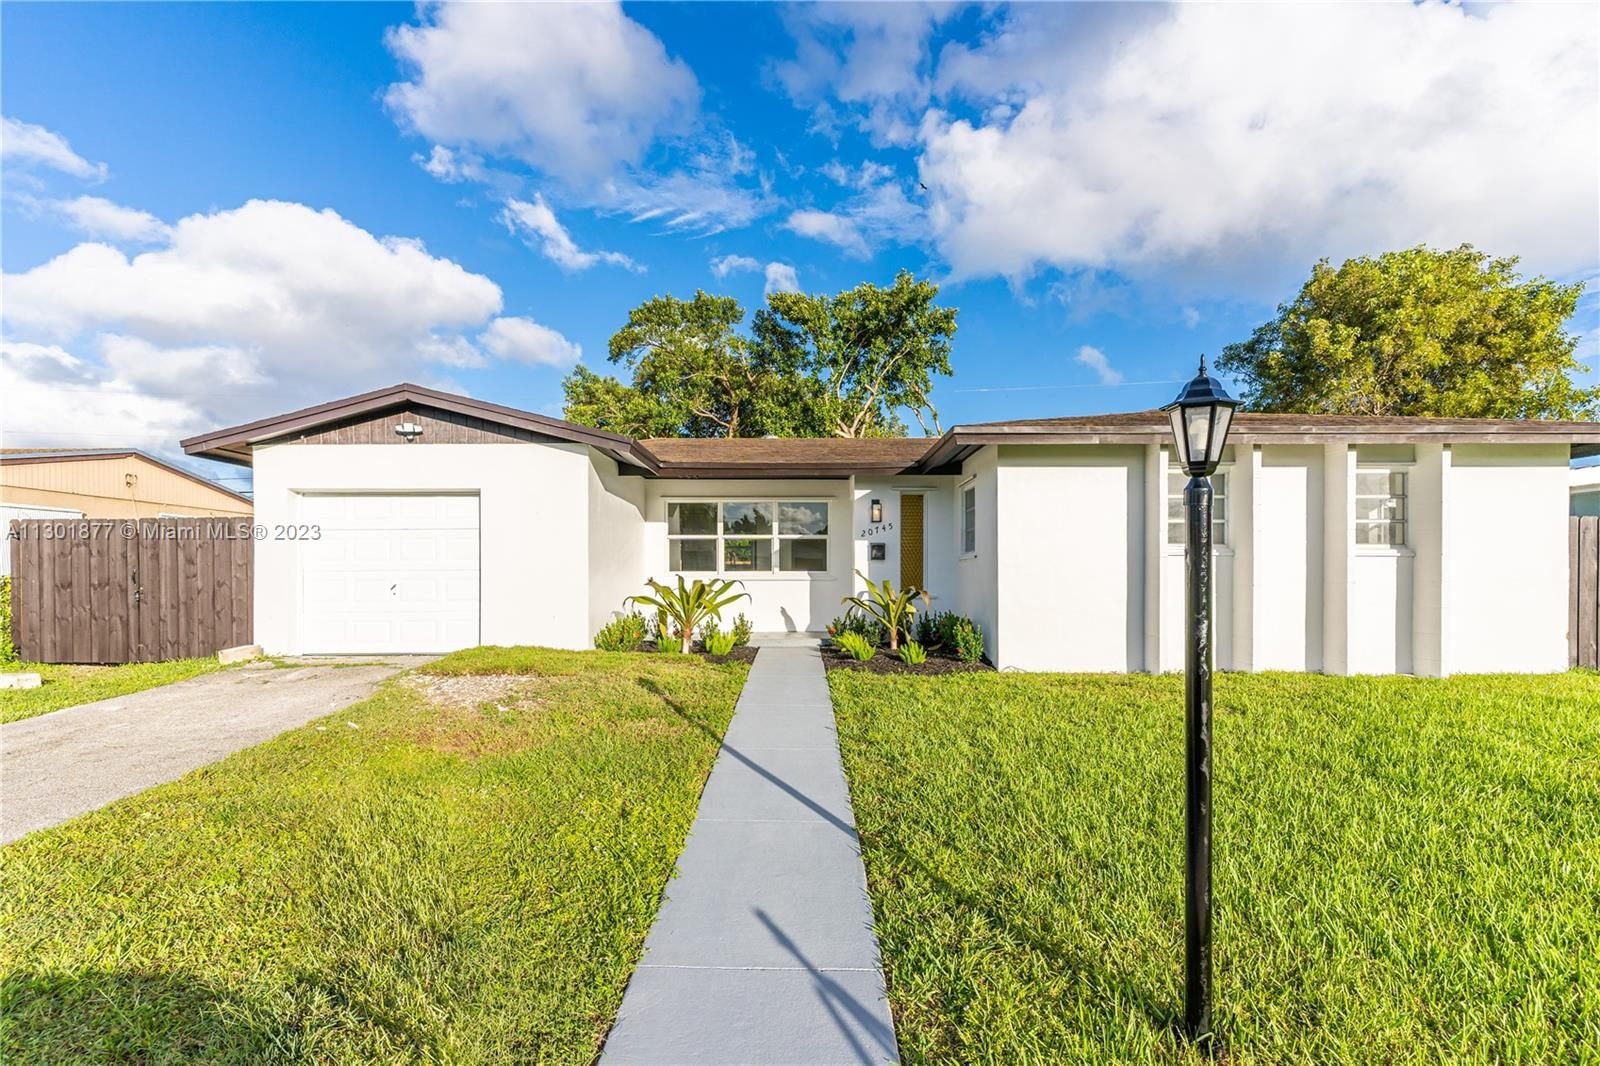 Real estate property located at 20745 114th Ct, Miami-Dade County, Miami, FL